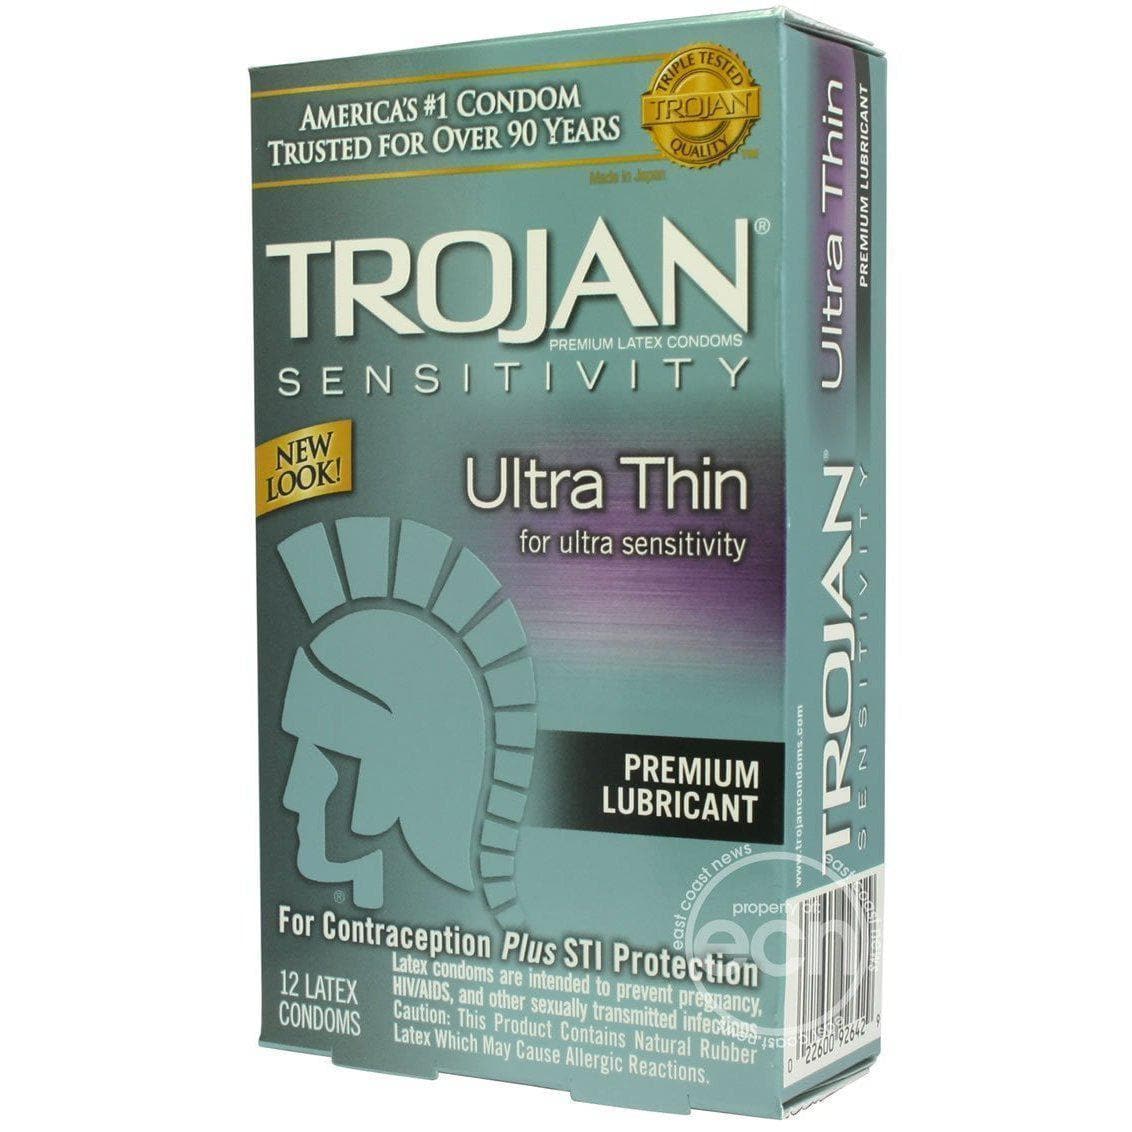 Trojan Condom Sensitivity Ultra Thin Lubricated 12 Pack - Romantic Blessings